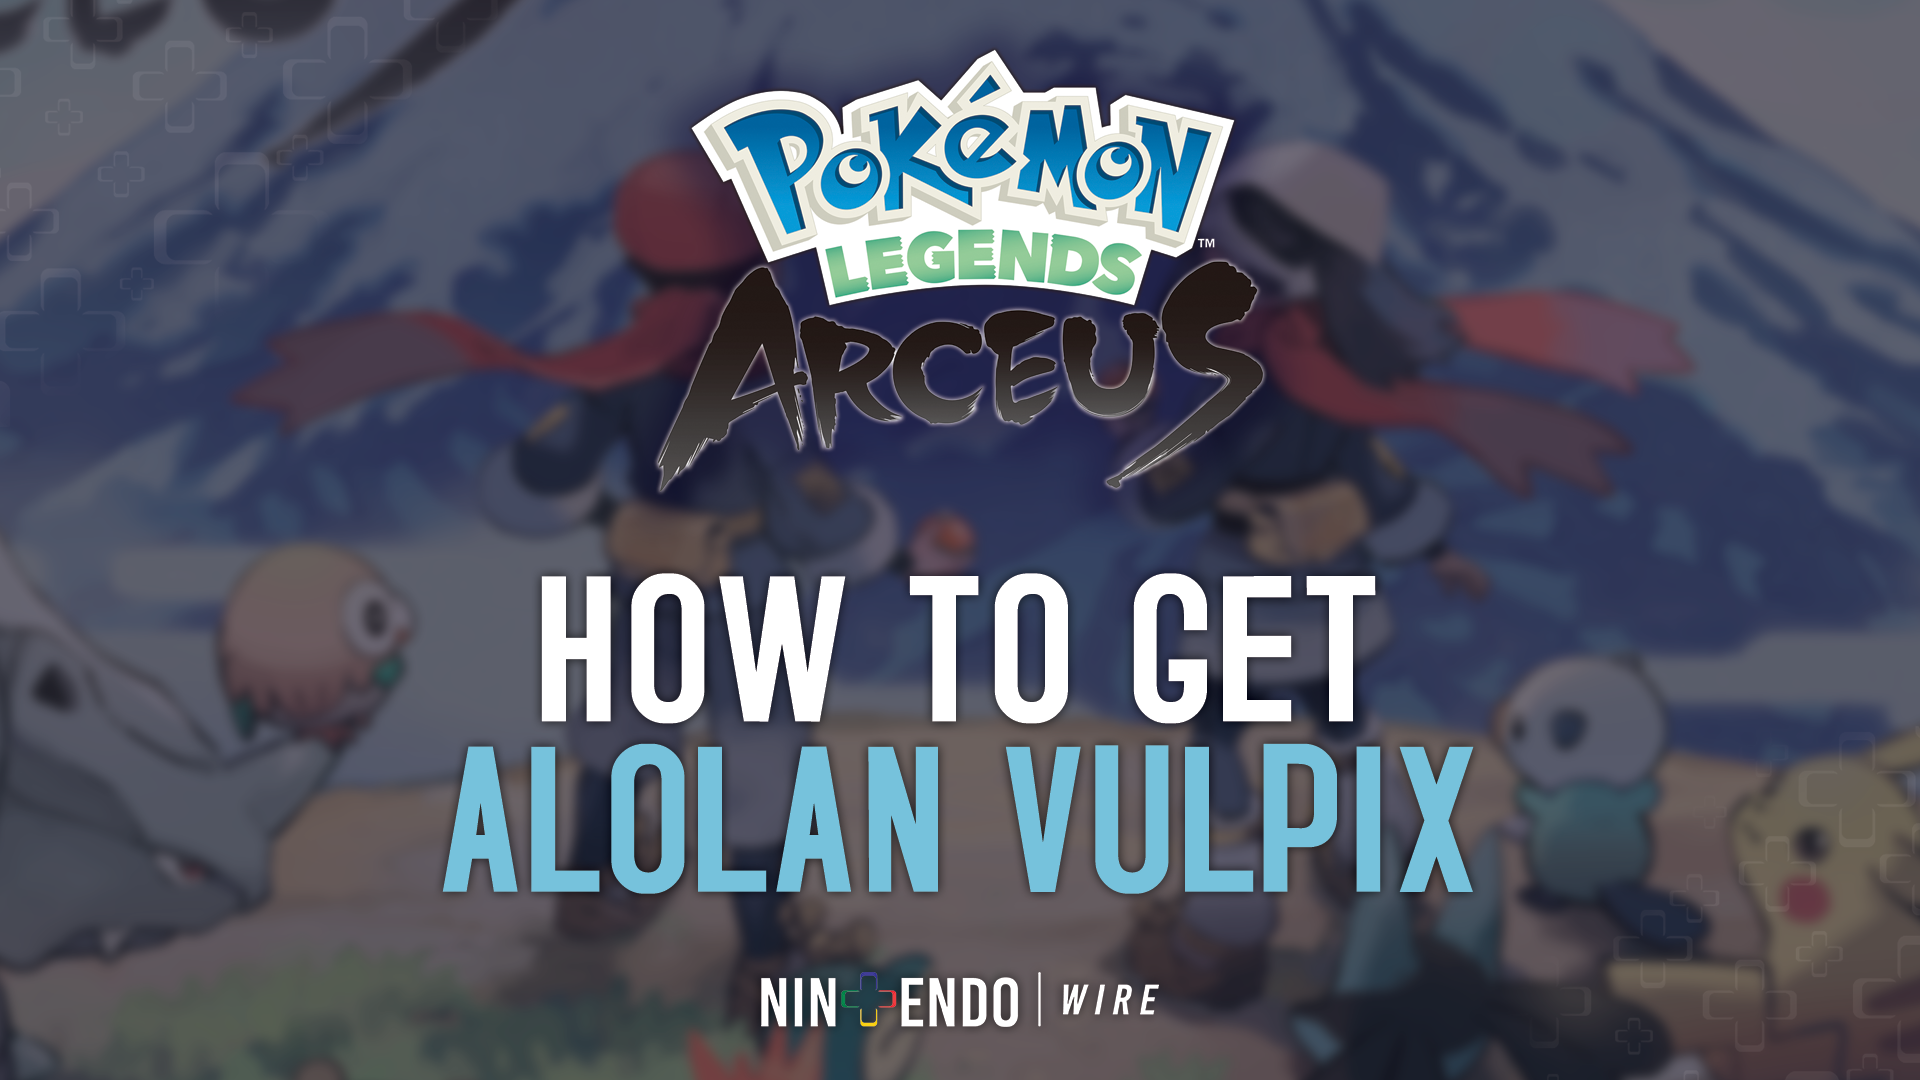 Pokémon Legends: Arceus — How to get Alolan Vulpix